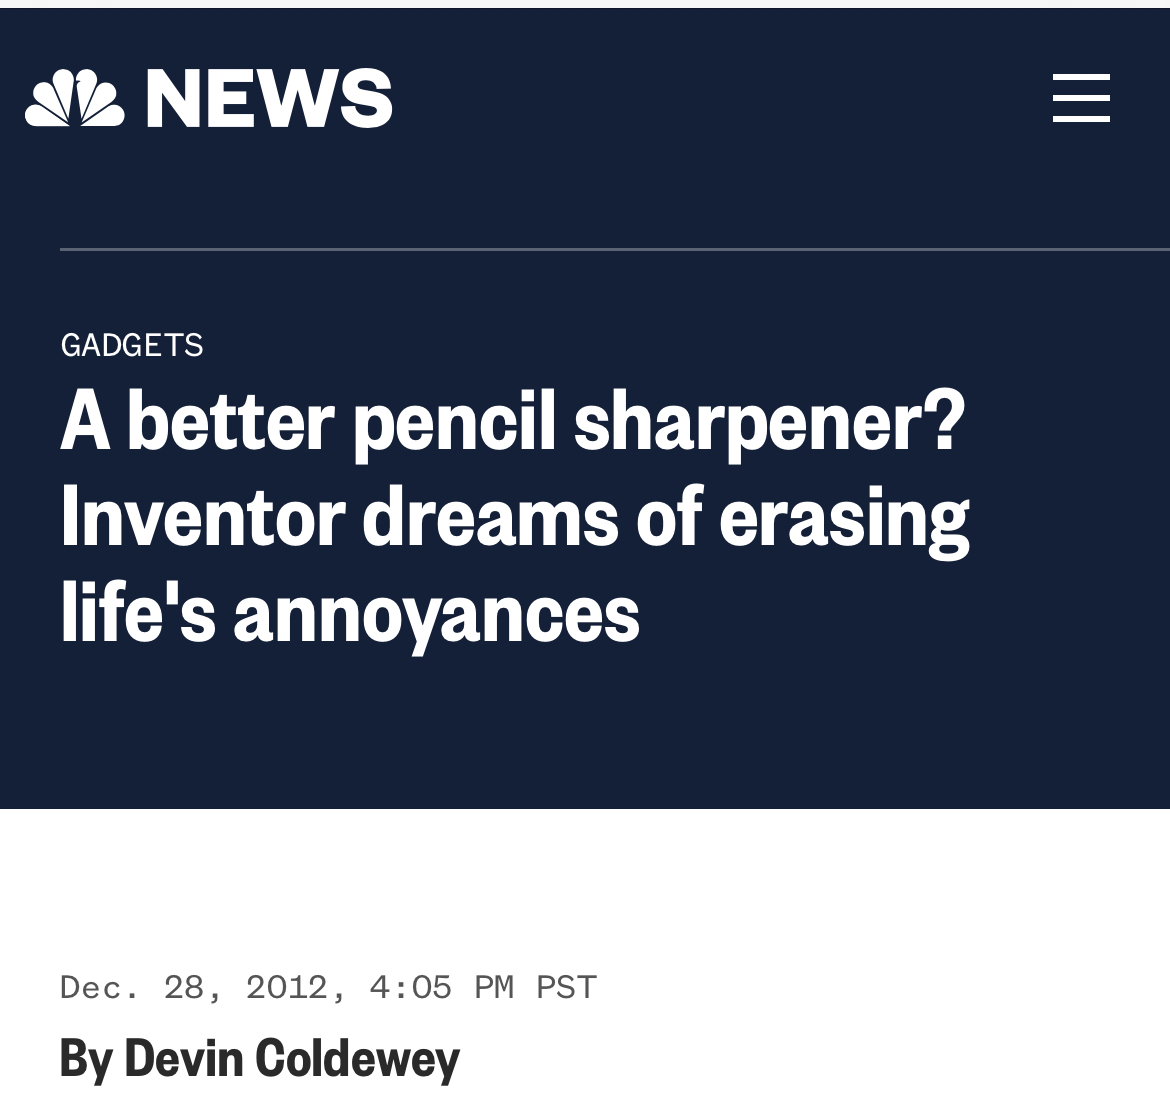 A better pencil sharpener? Inventor dreams of erasing life's annoyances